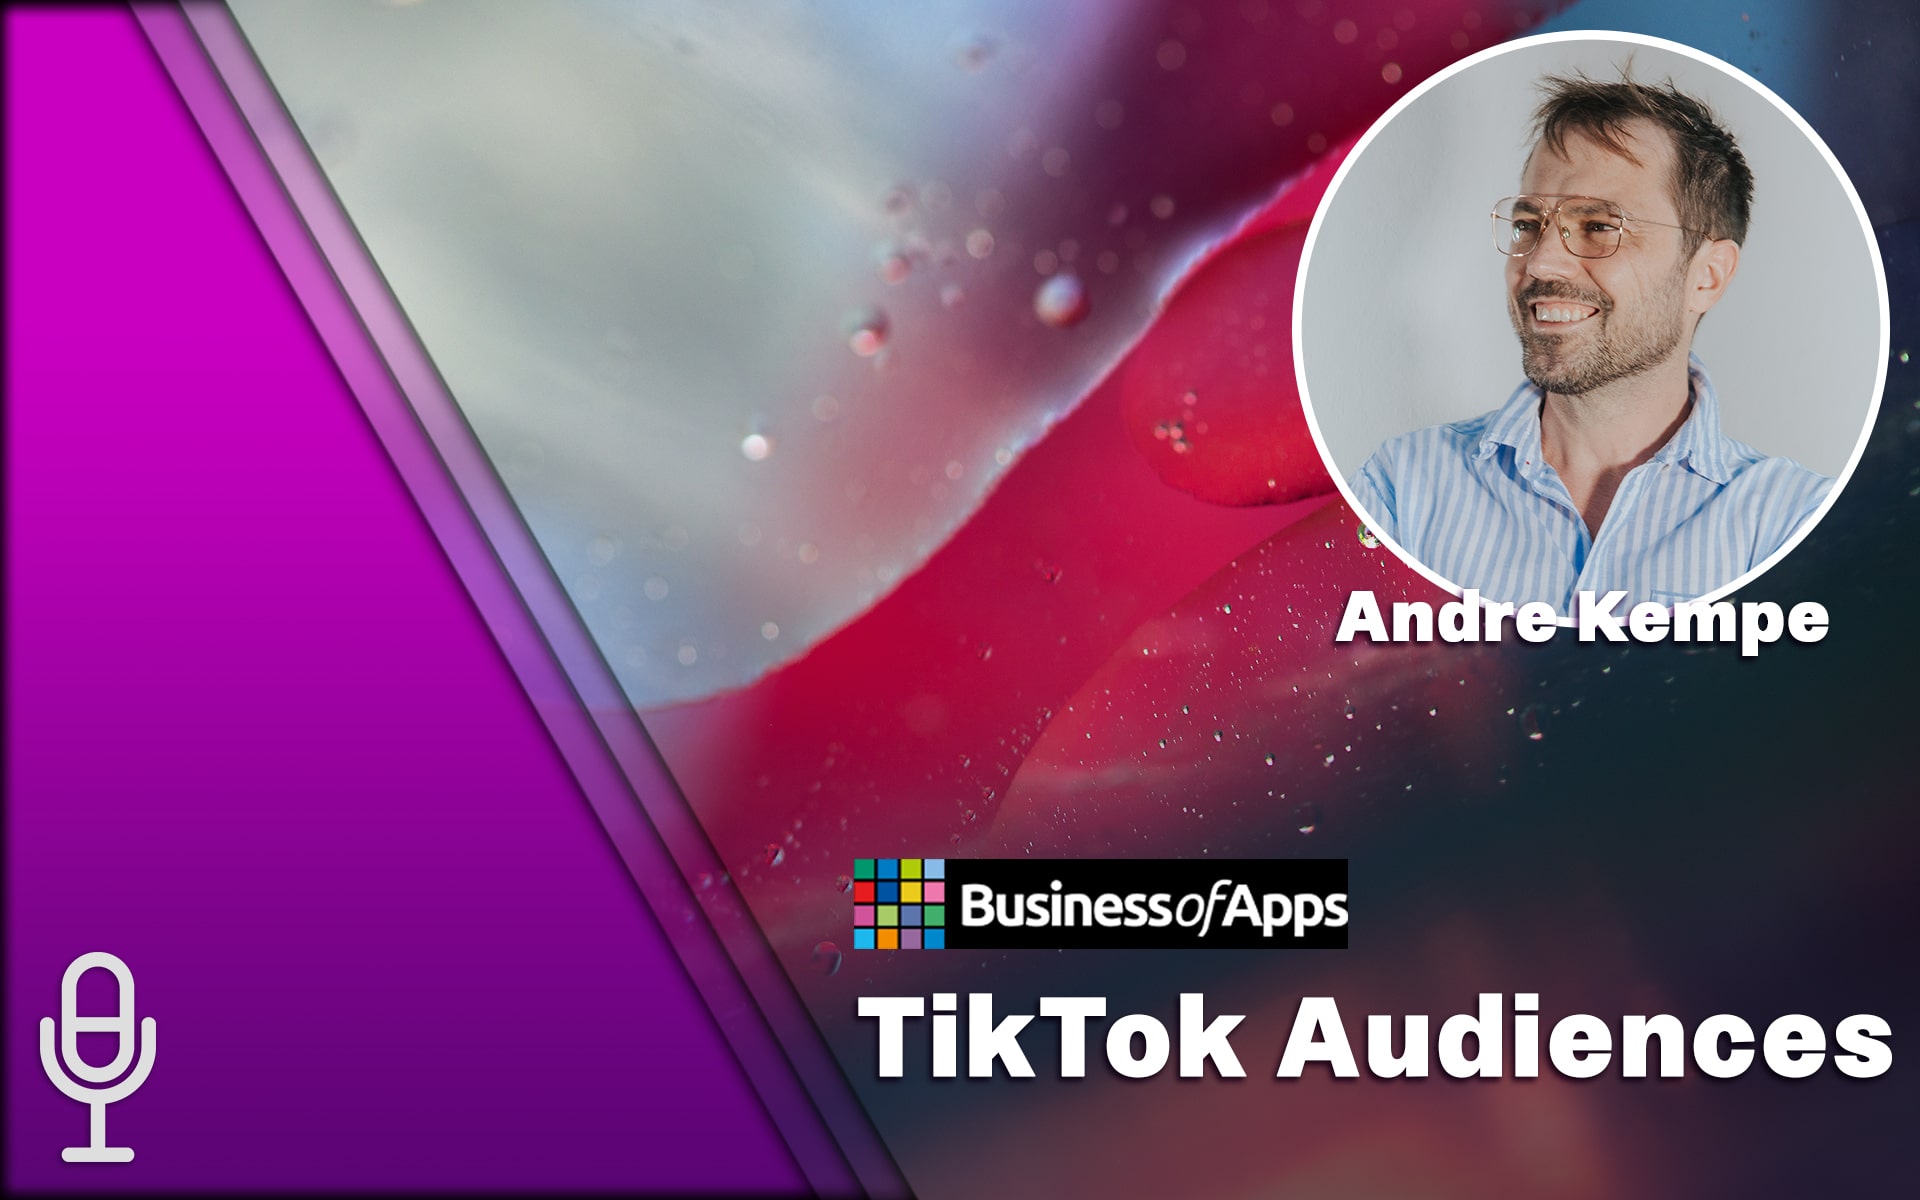 TikTok Audiences with Andre Kempe